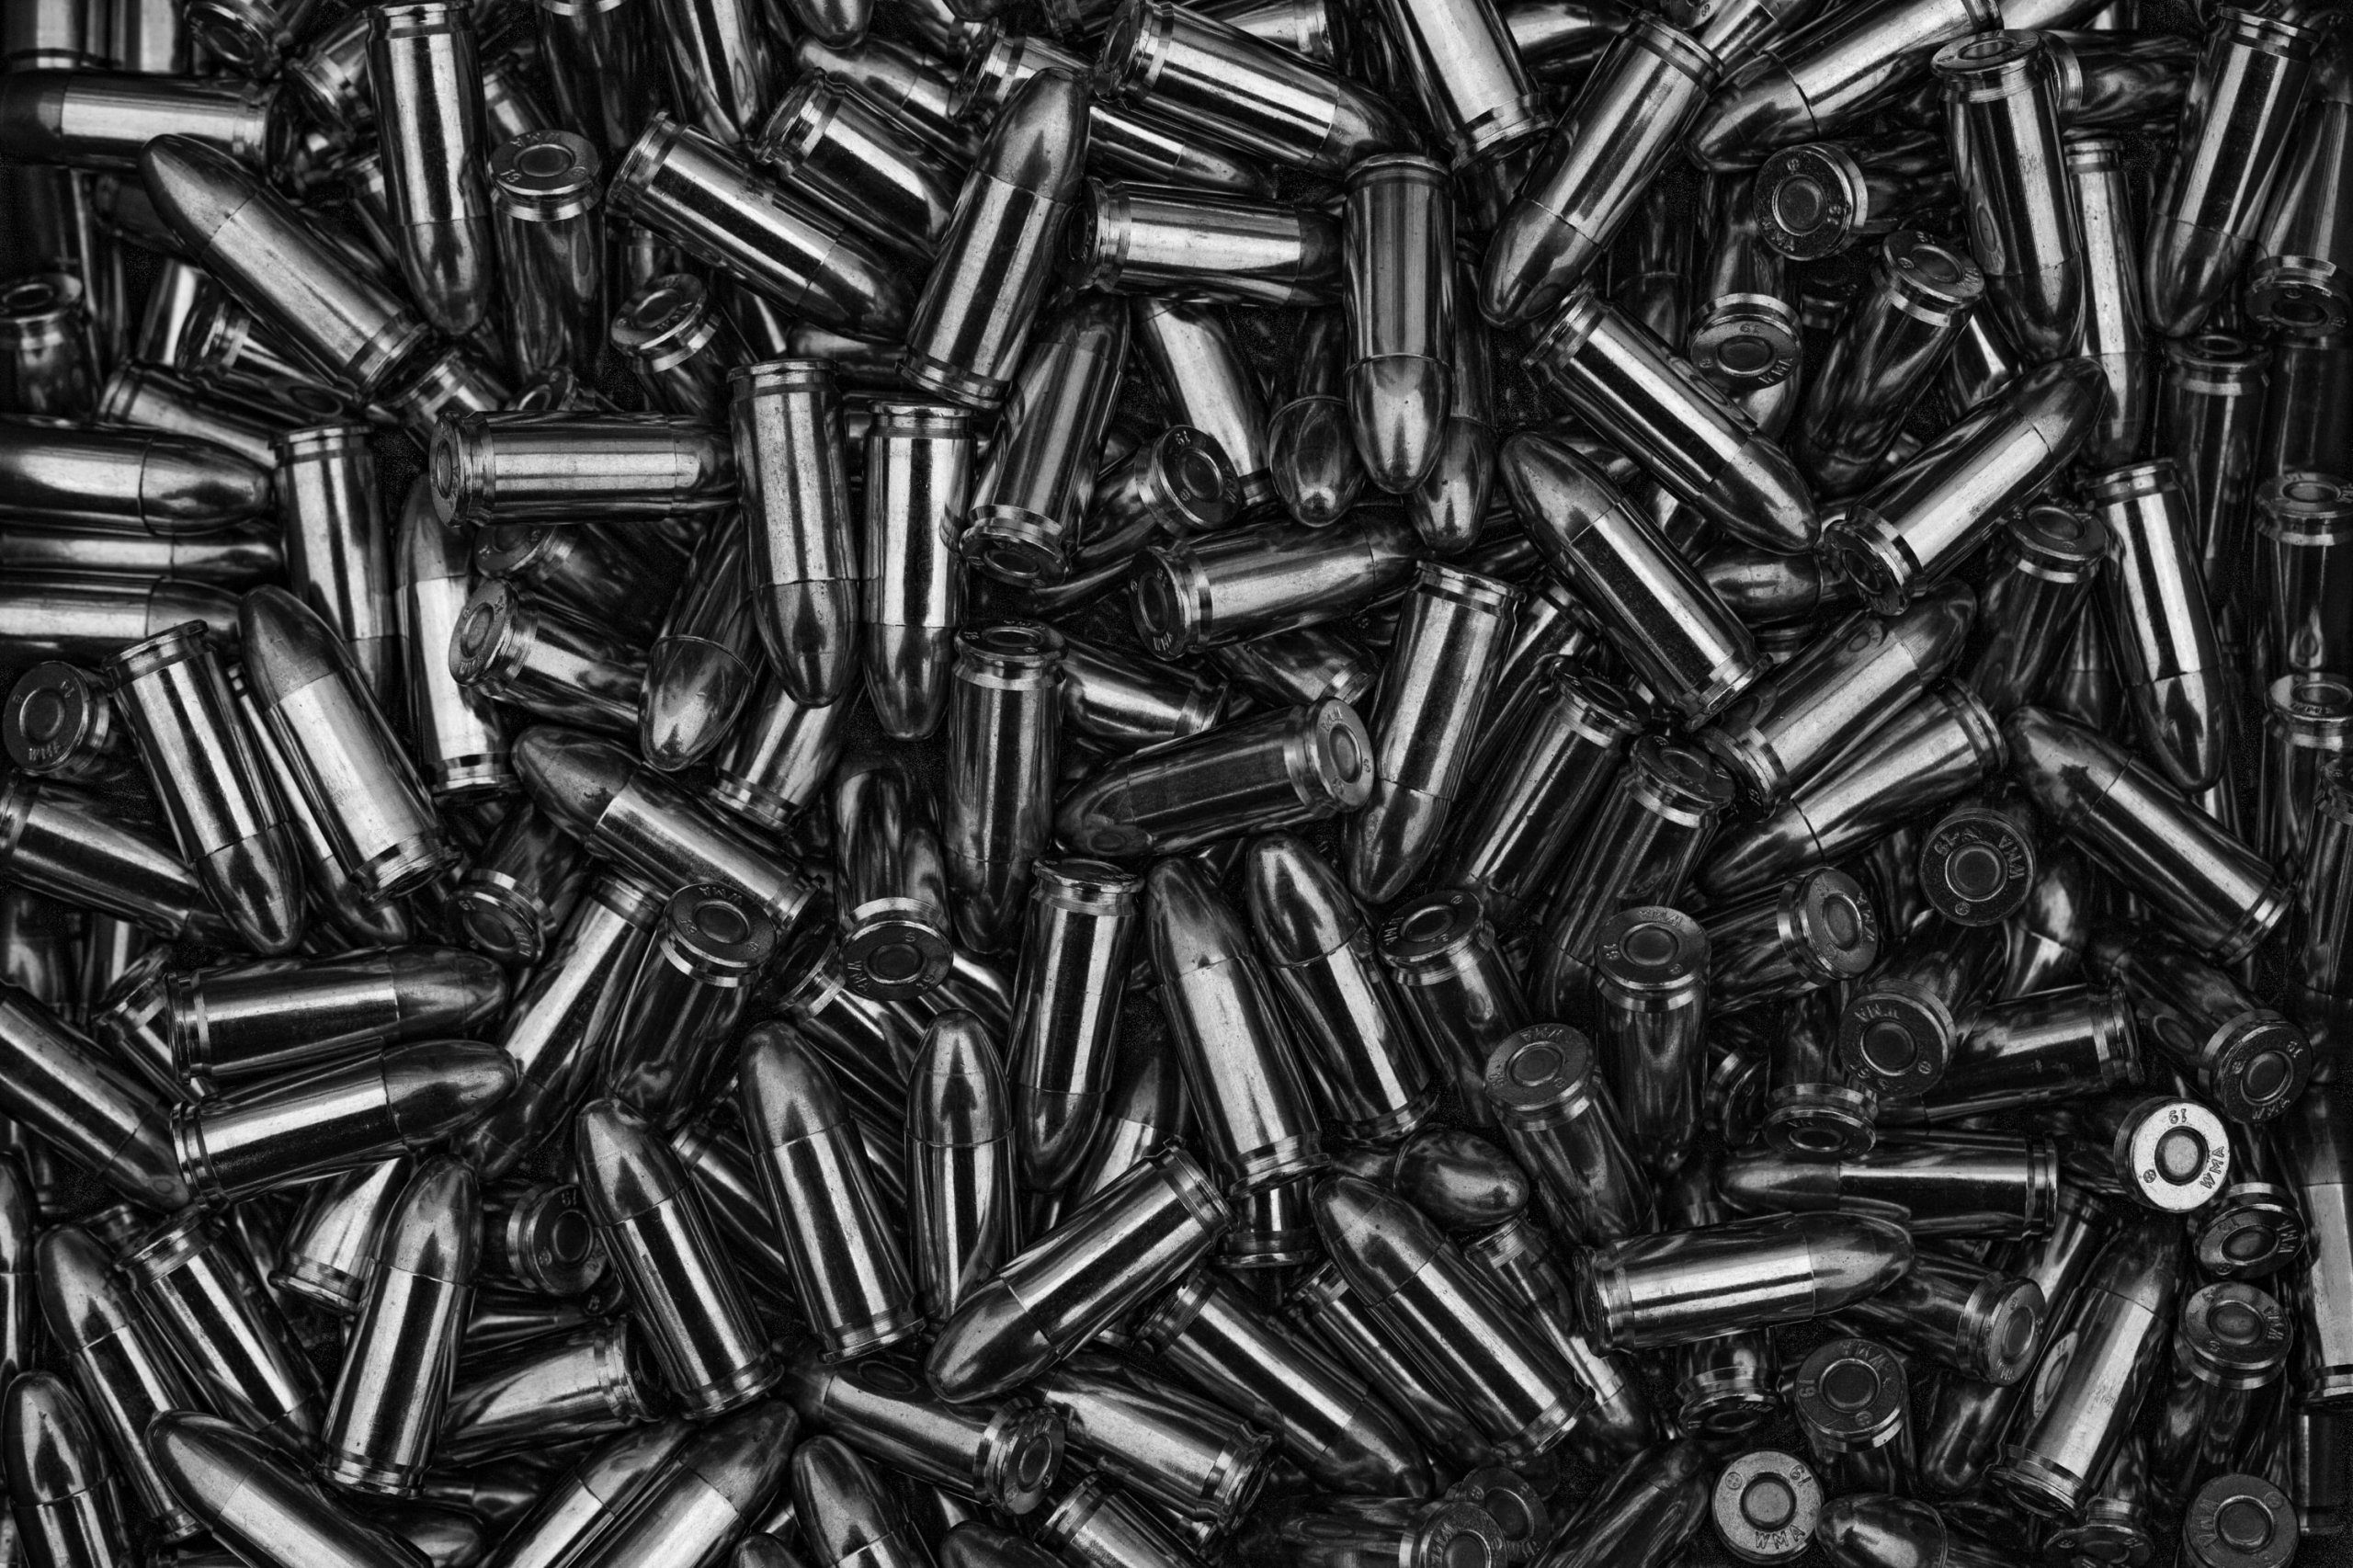 45 Colt Load Data - Guns and Ammo